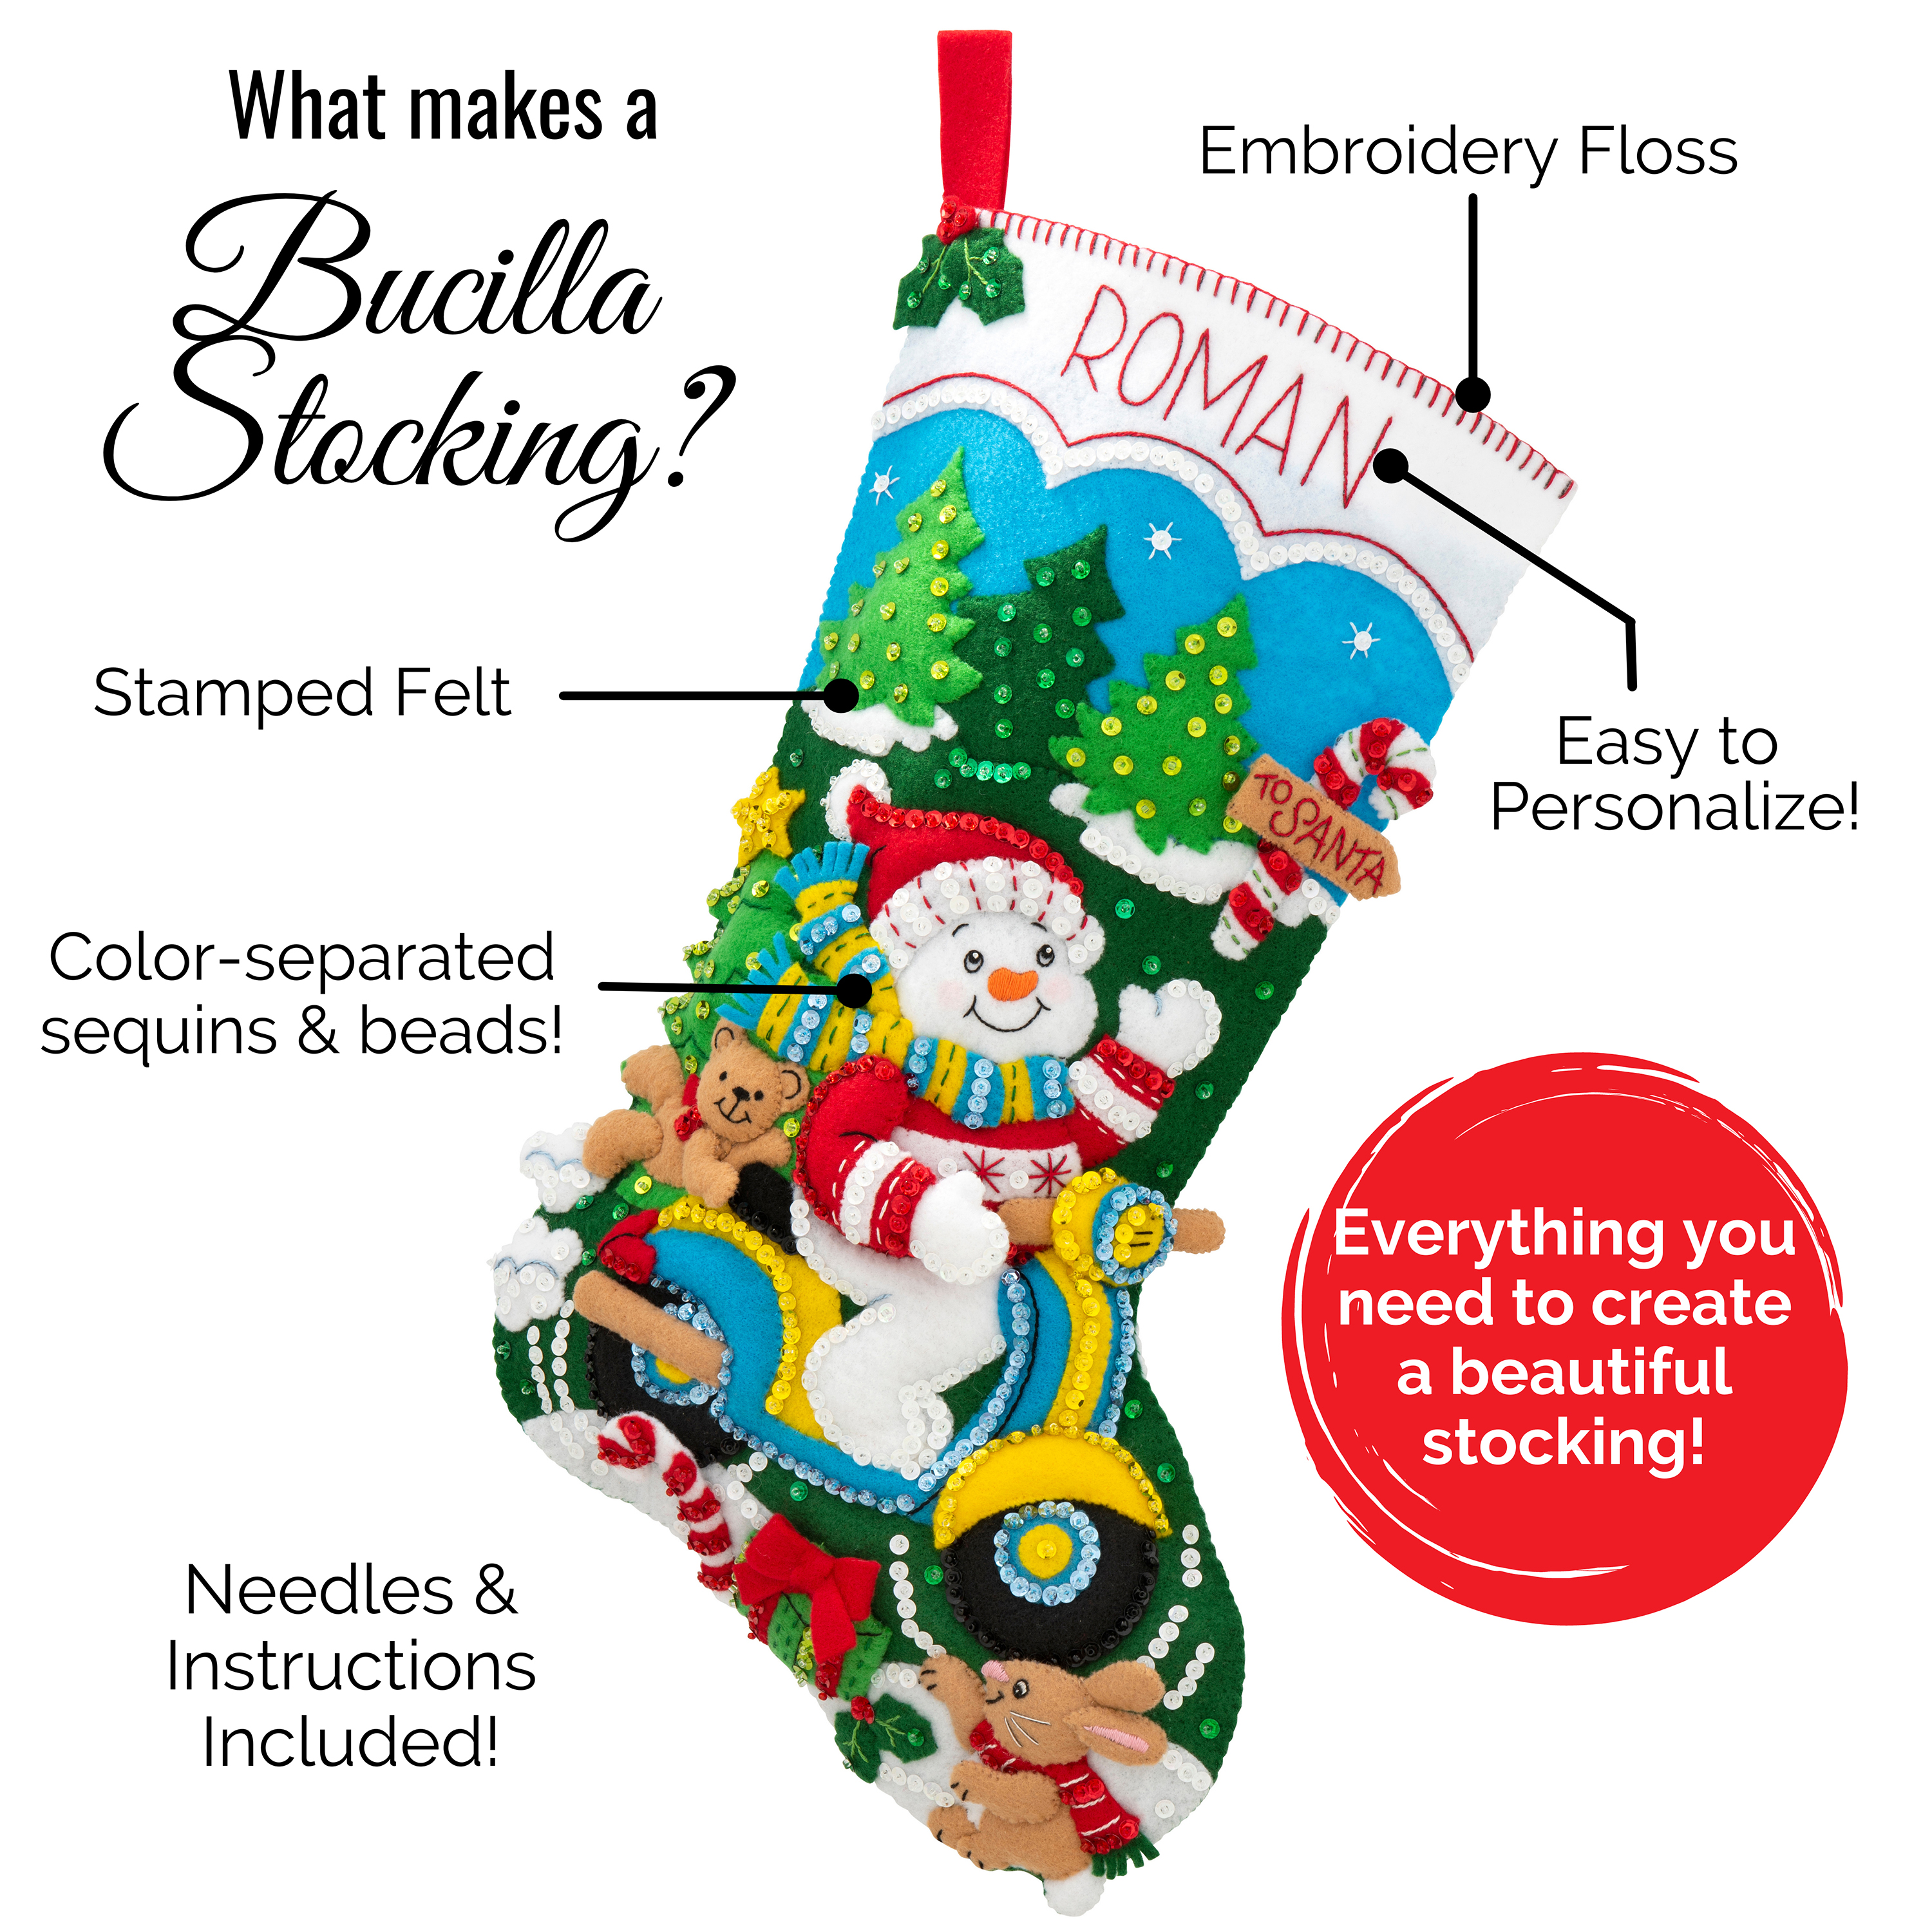 Bucilla ® Seasonal - Felt - Stocking Kits - Gifting Snowman - 89533E